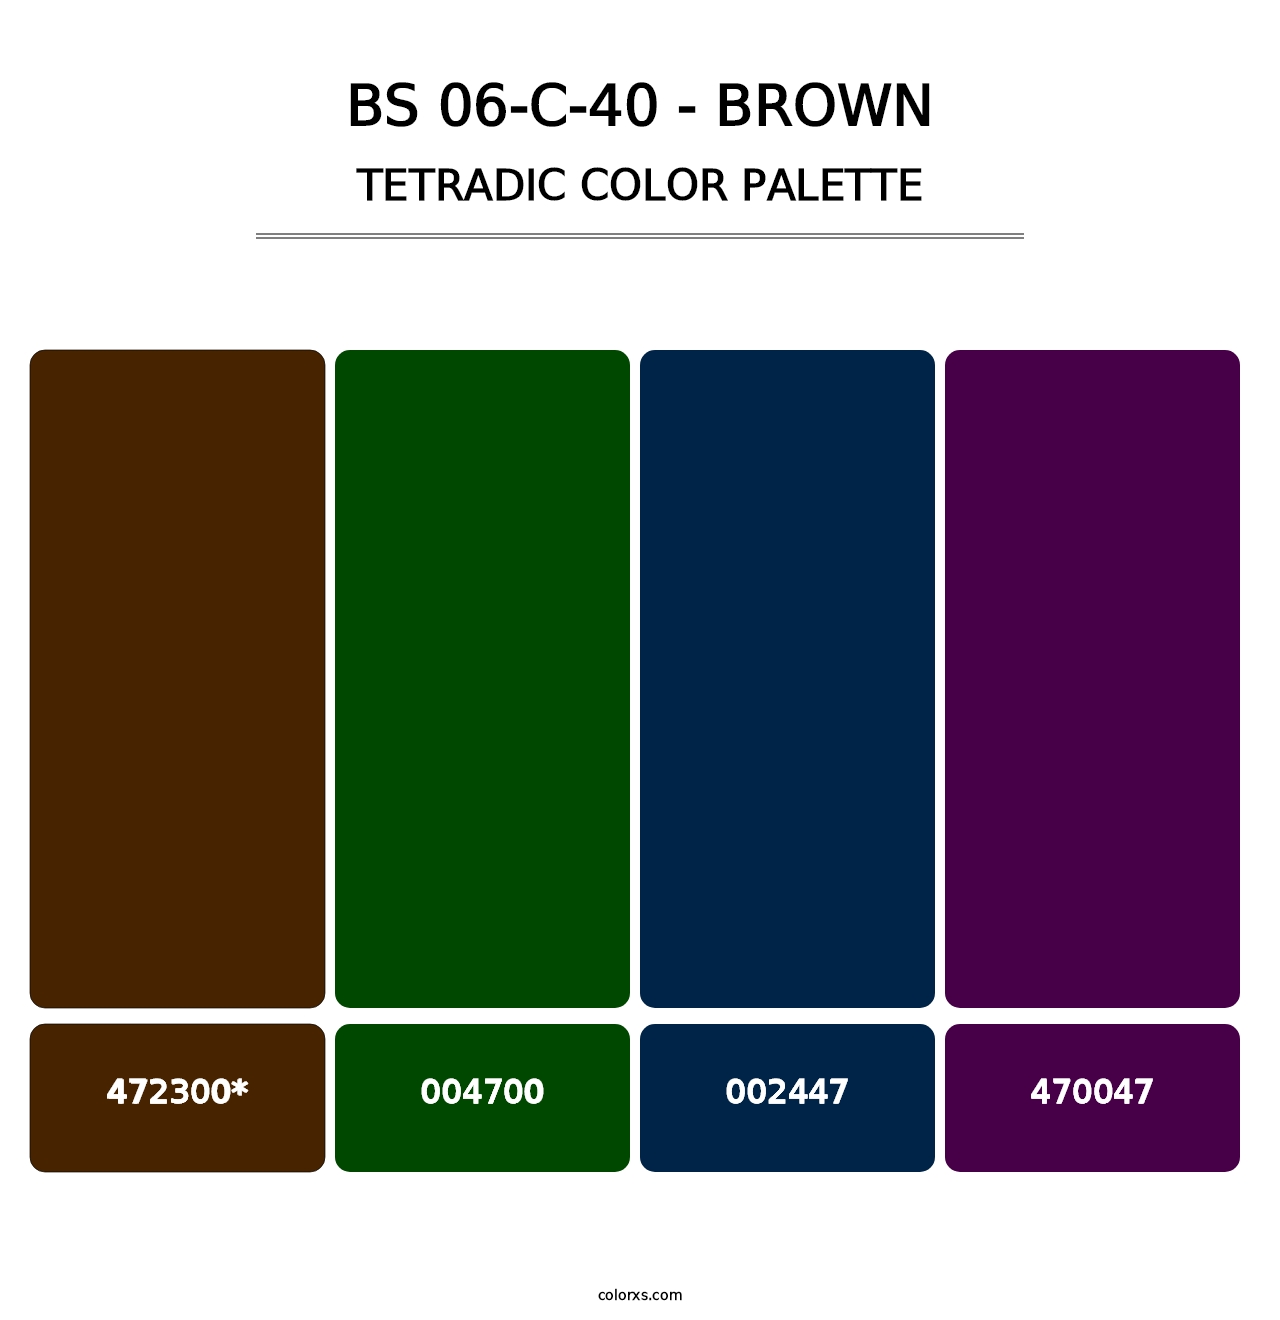 BS 06-C-40 - Brown - Tetradic Color Palette